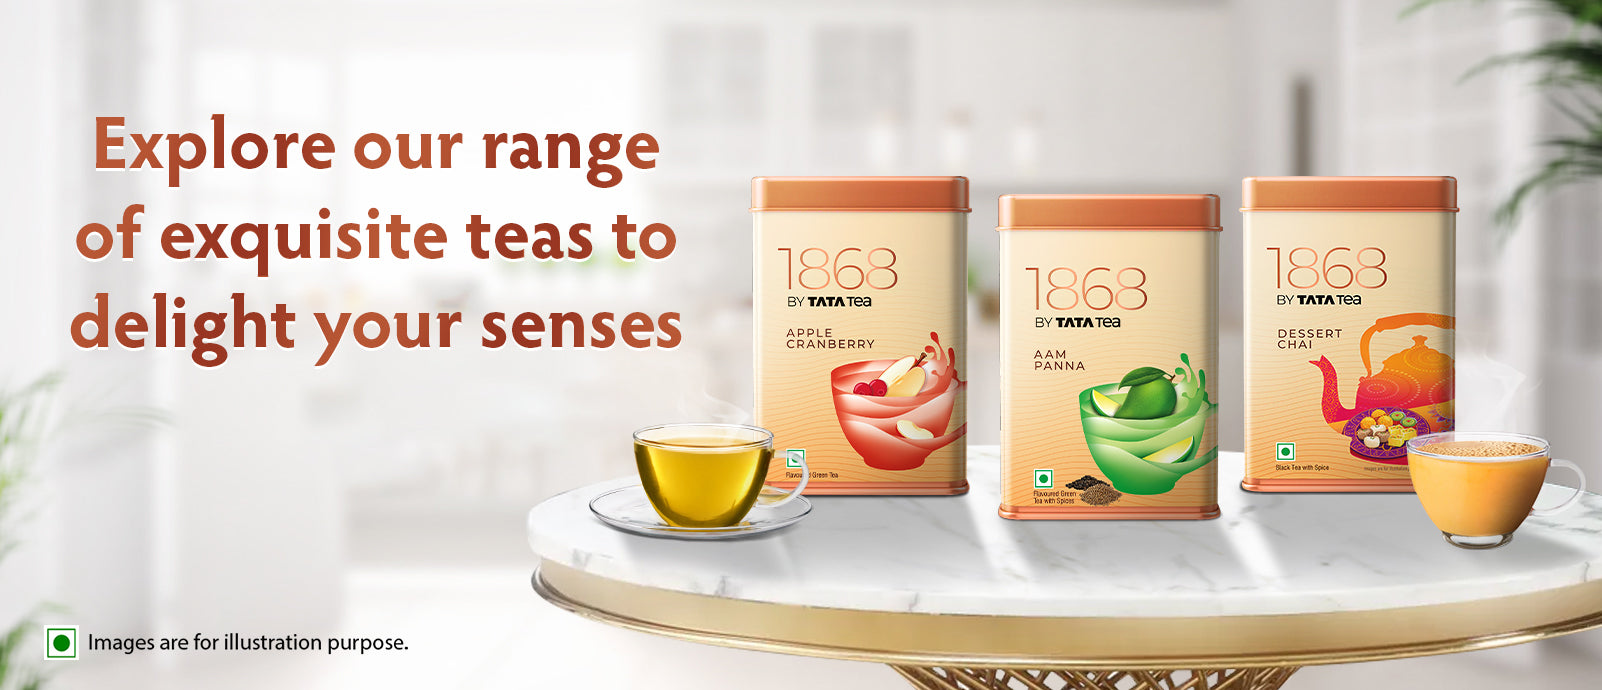 Romantic Teas - Tea Journey